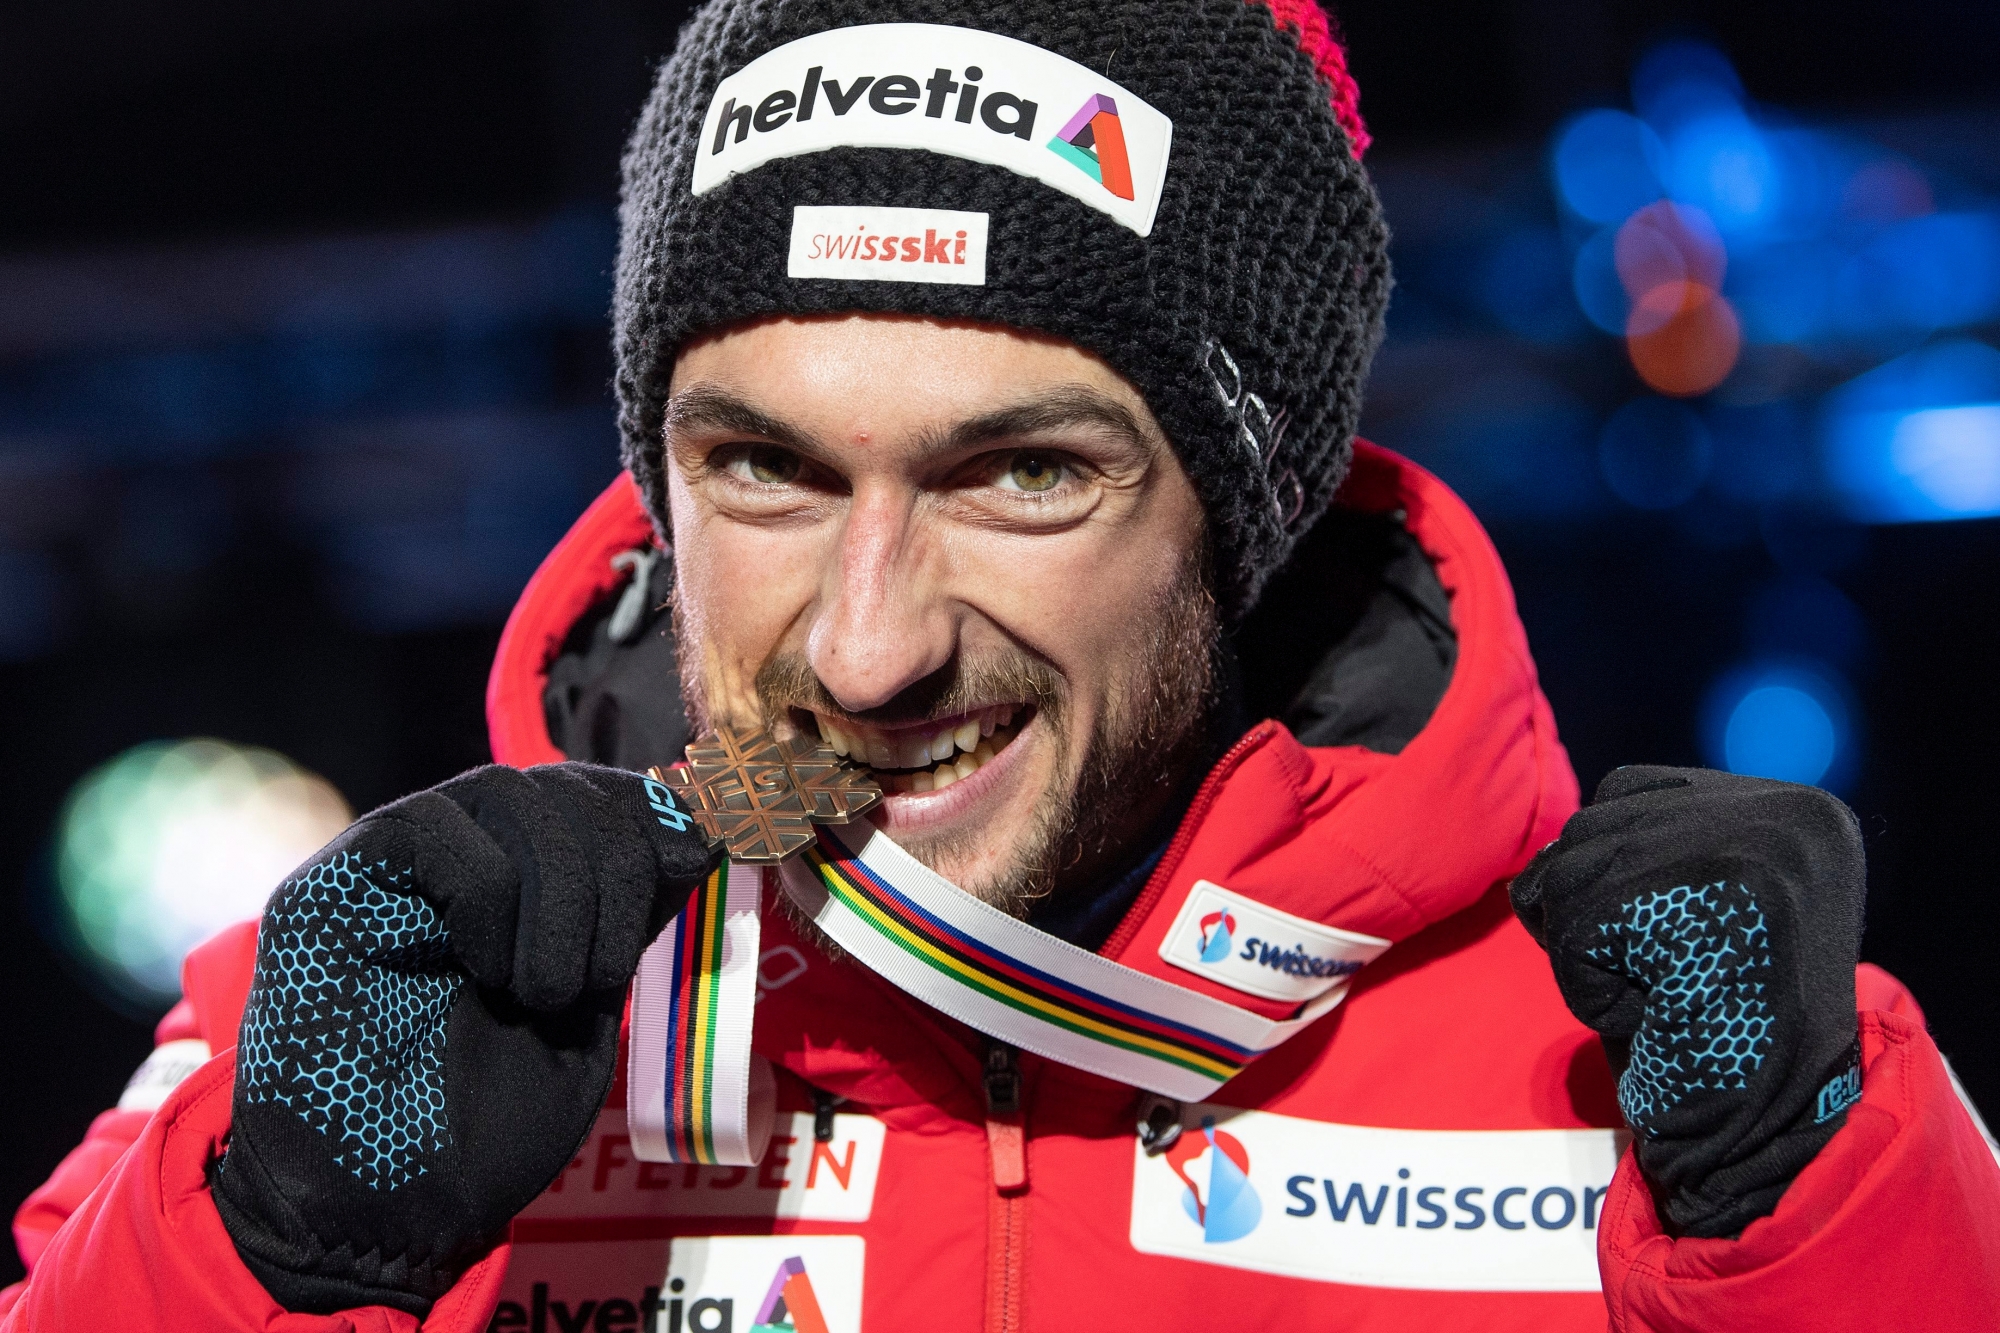 Switzerland's Killian Peier, bronze medalist, celebrates during the medal ceremony at the 2019 Nordic Skiing World Championships in Seefeld, Austria, on Saturday, 23 February 2019. (KEYSTONE/Peter Schneider) AUSTRIA 2019 NORDIC SKIING WORLDS CROSS COUNTRY SKIING